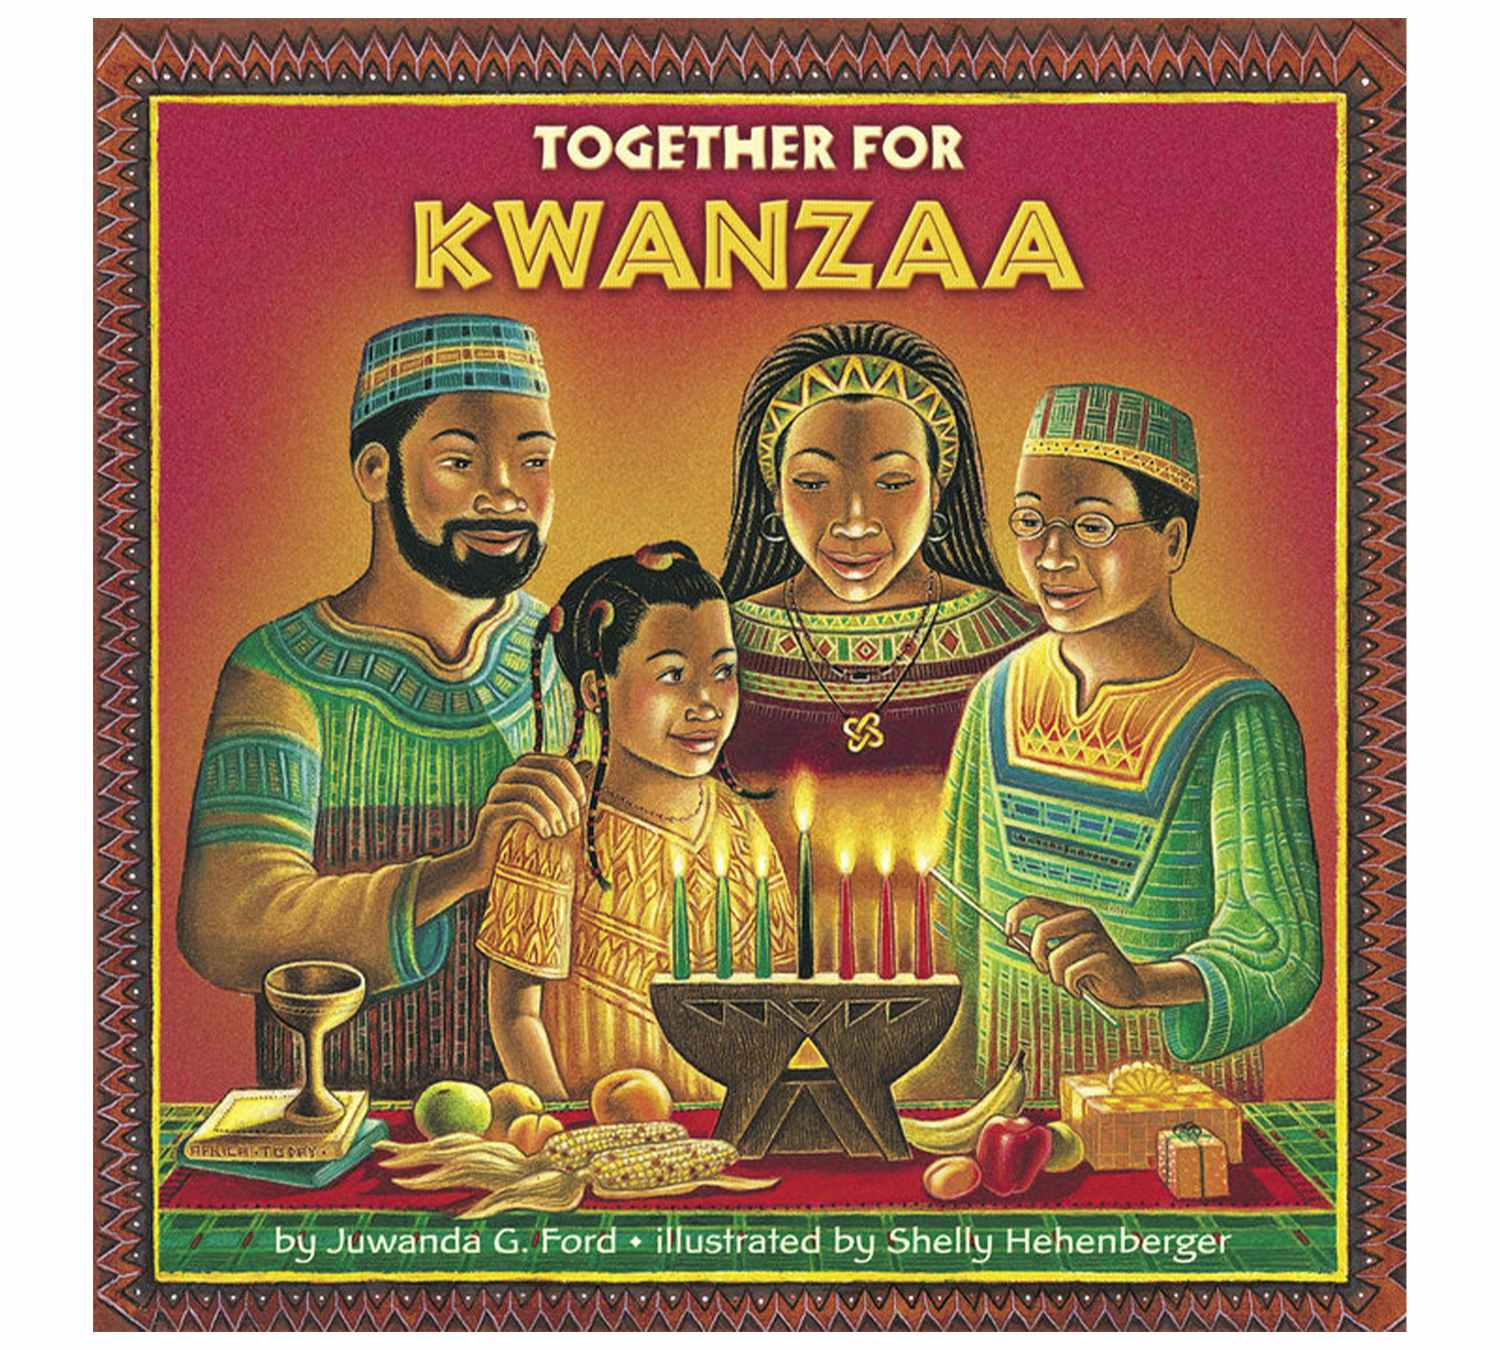 best kwanzaa gifts - Together for Kwanzaa book